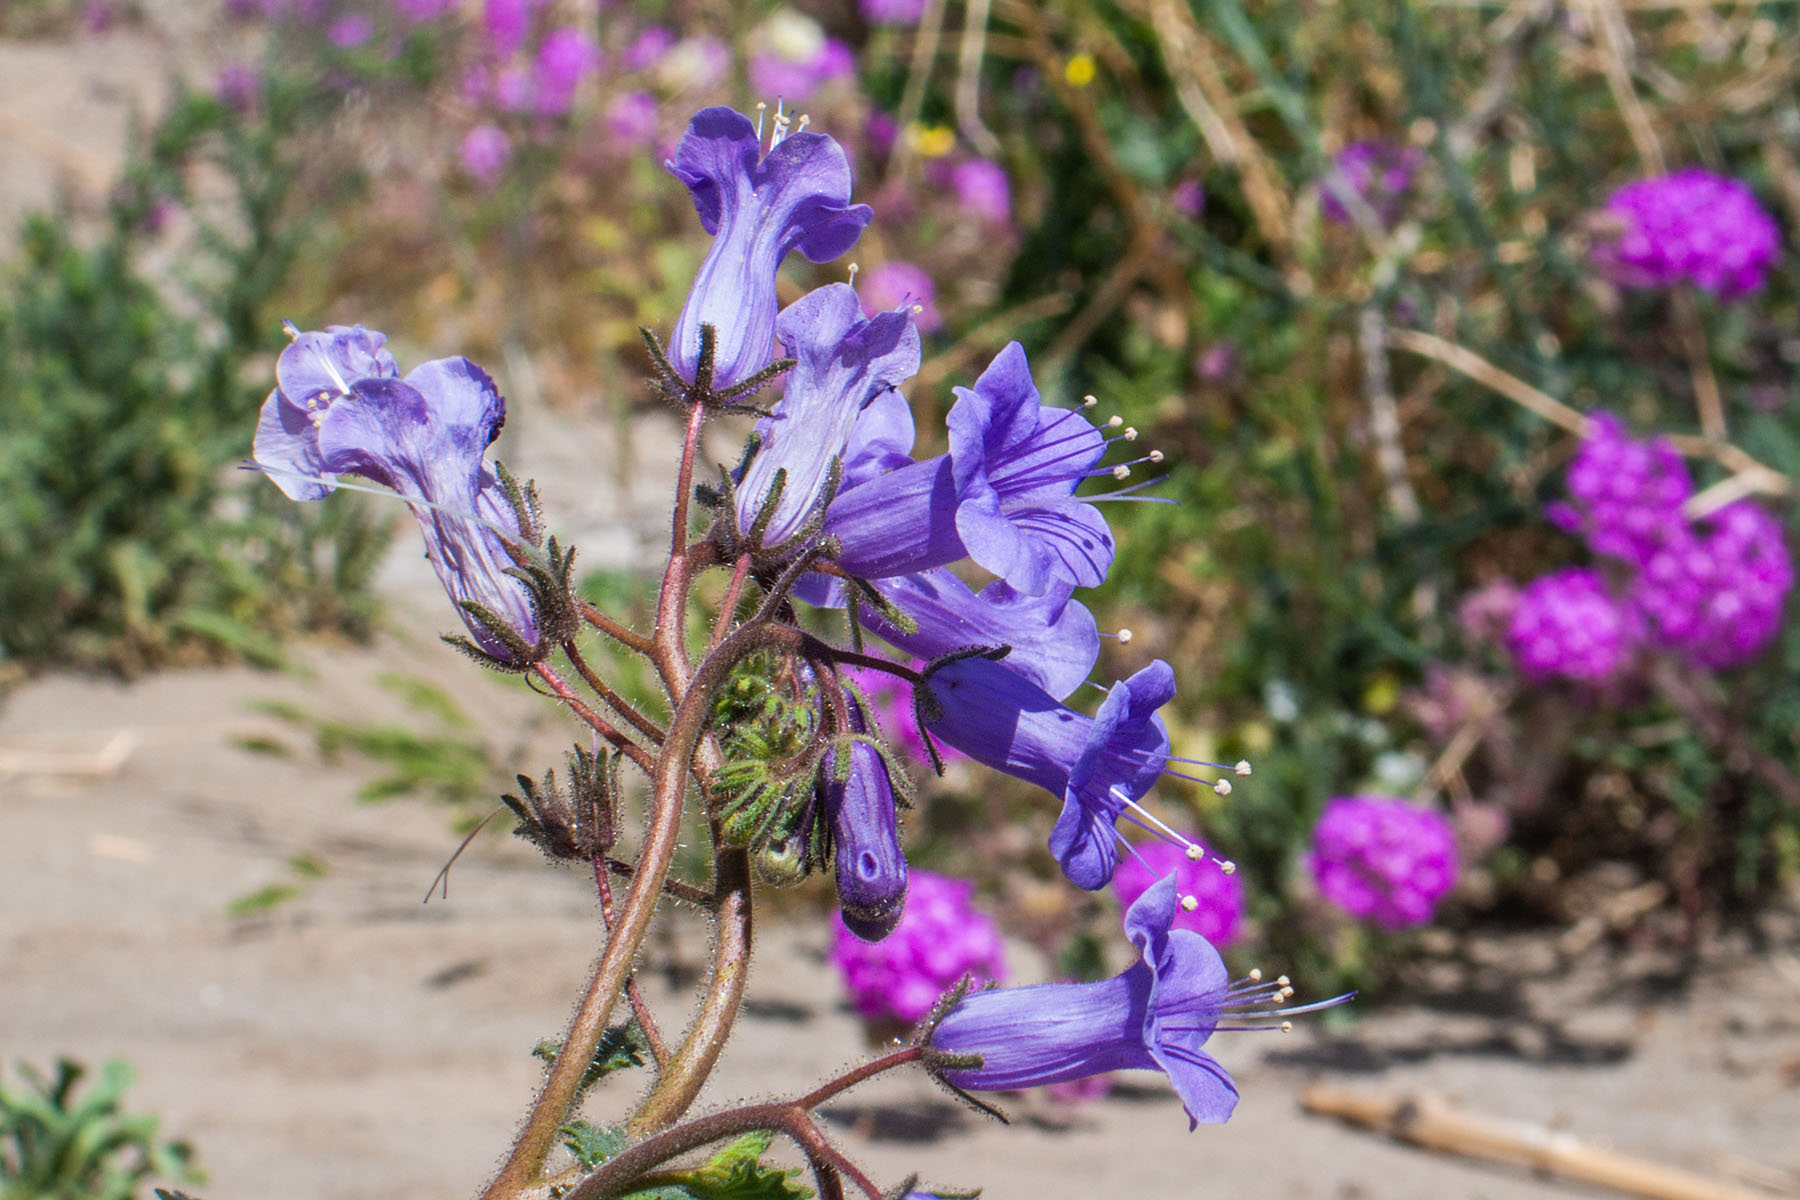 Flowers in the desert, Borrego Springs, California.  Click for next photo.